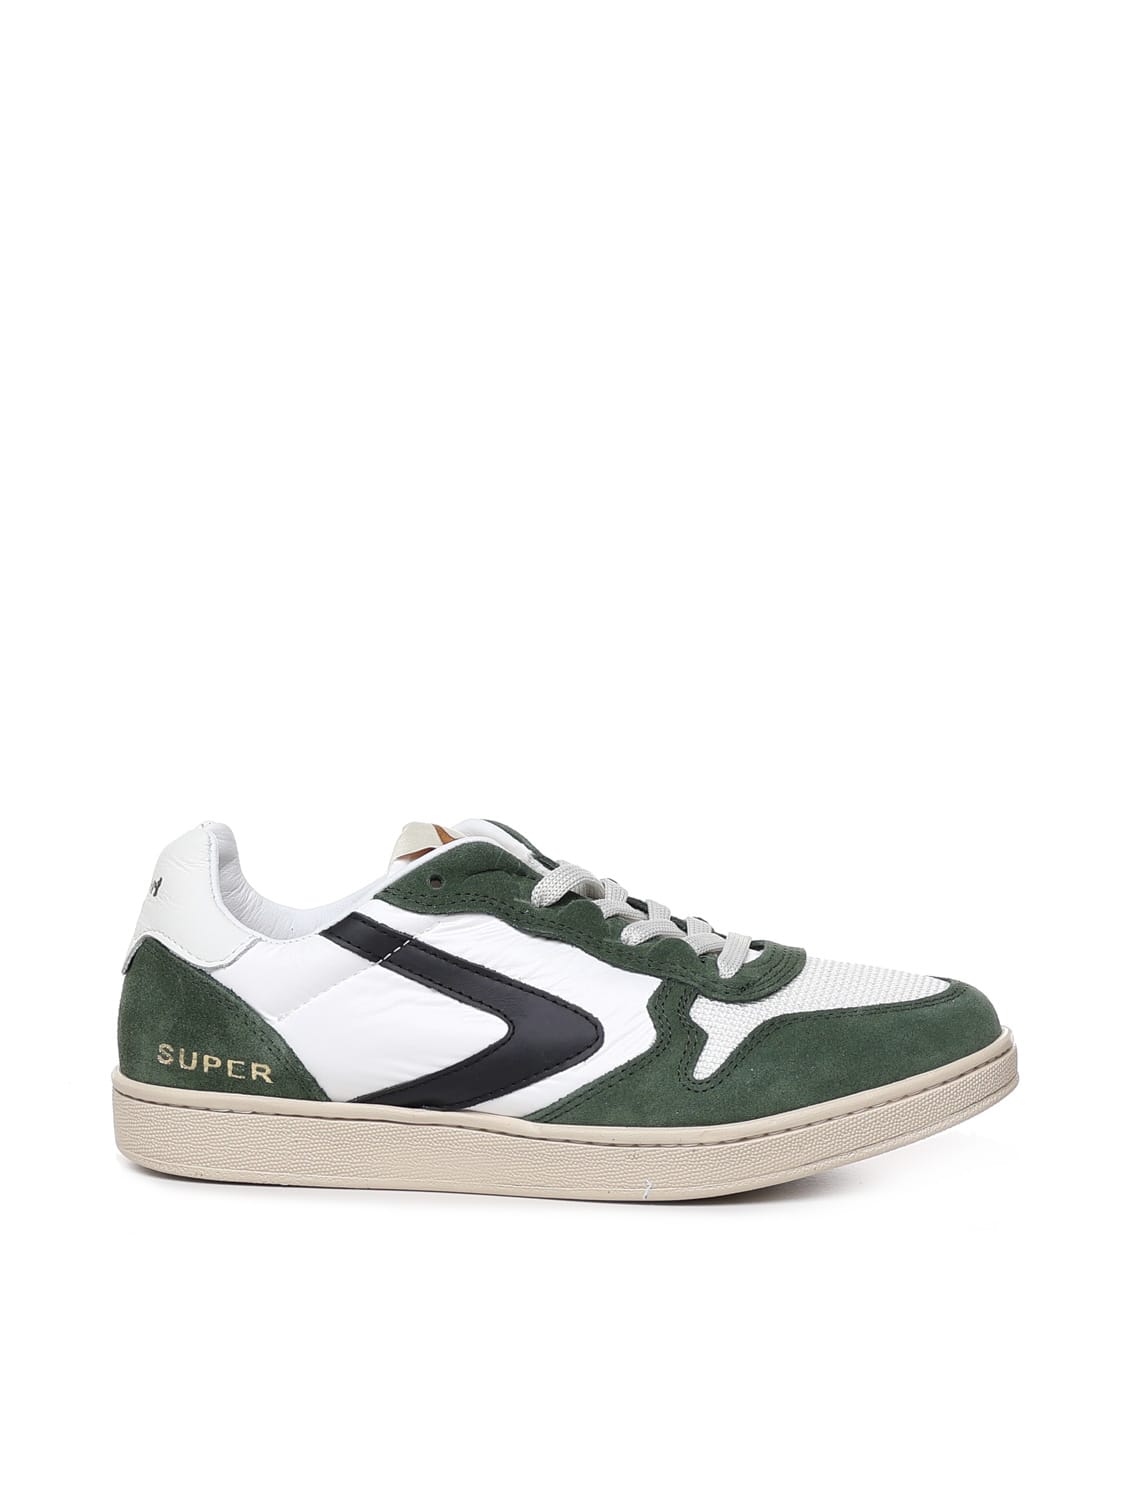 Valsport Super Nylon 03 Sneakers In White, Green, Black